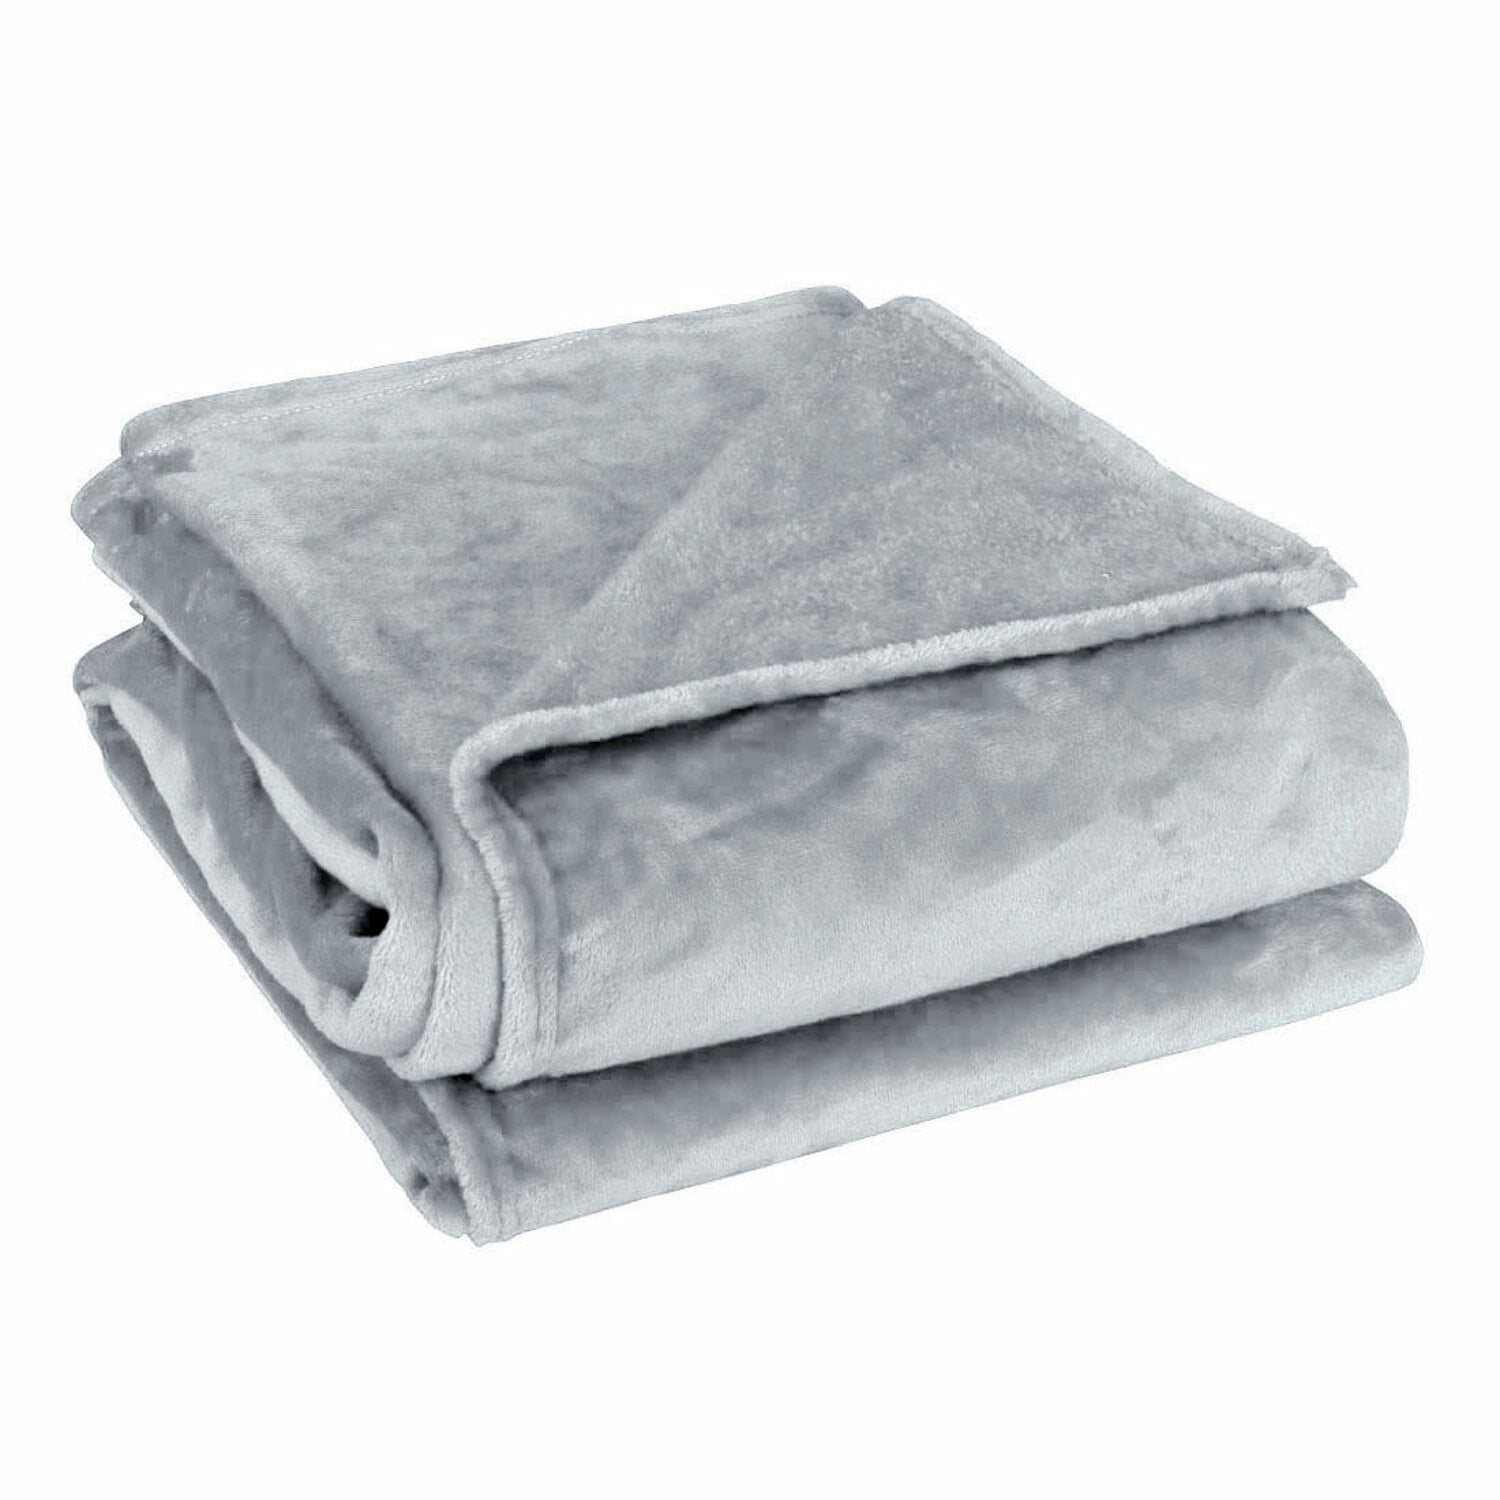 Details about   U UQUI Flannel Fleece Blanket Twin Size Extra Cozy All Seasons Soft Plush Micr 